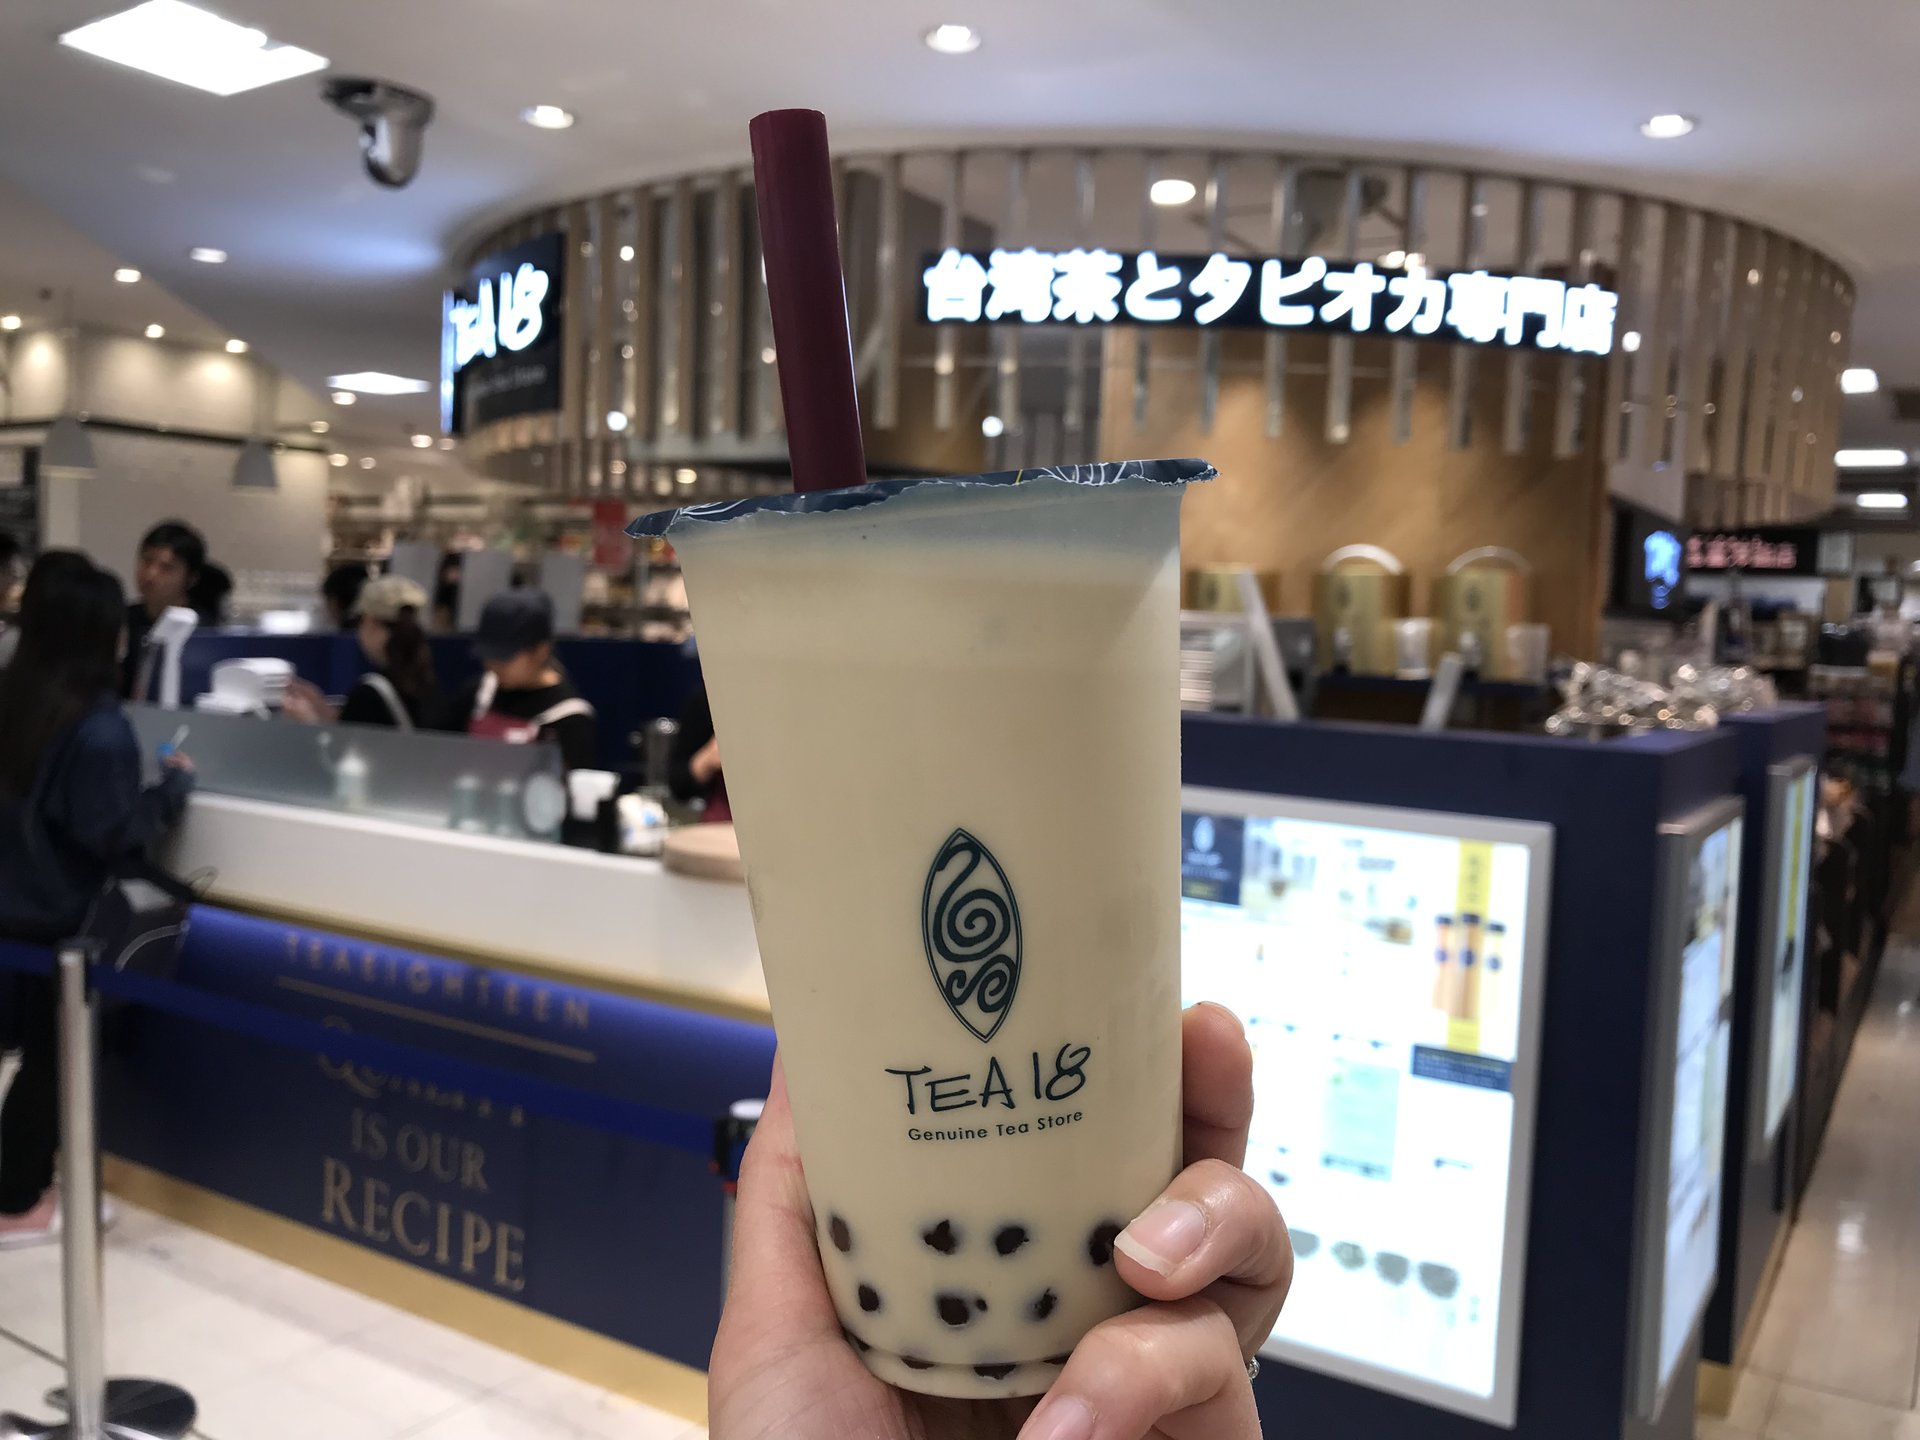 TEA18 そごう横浜店 